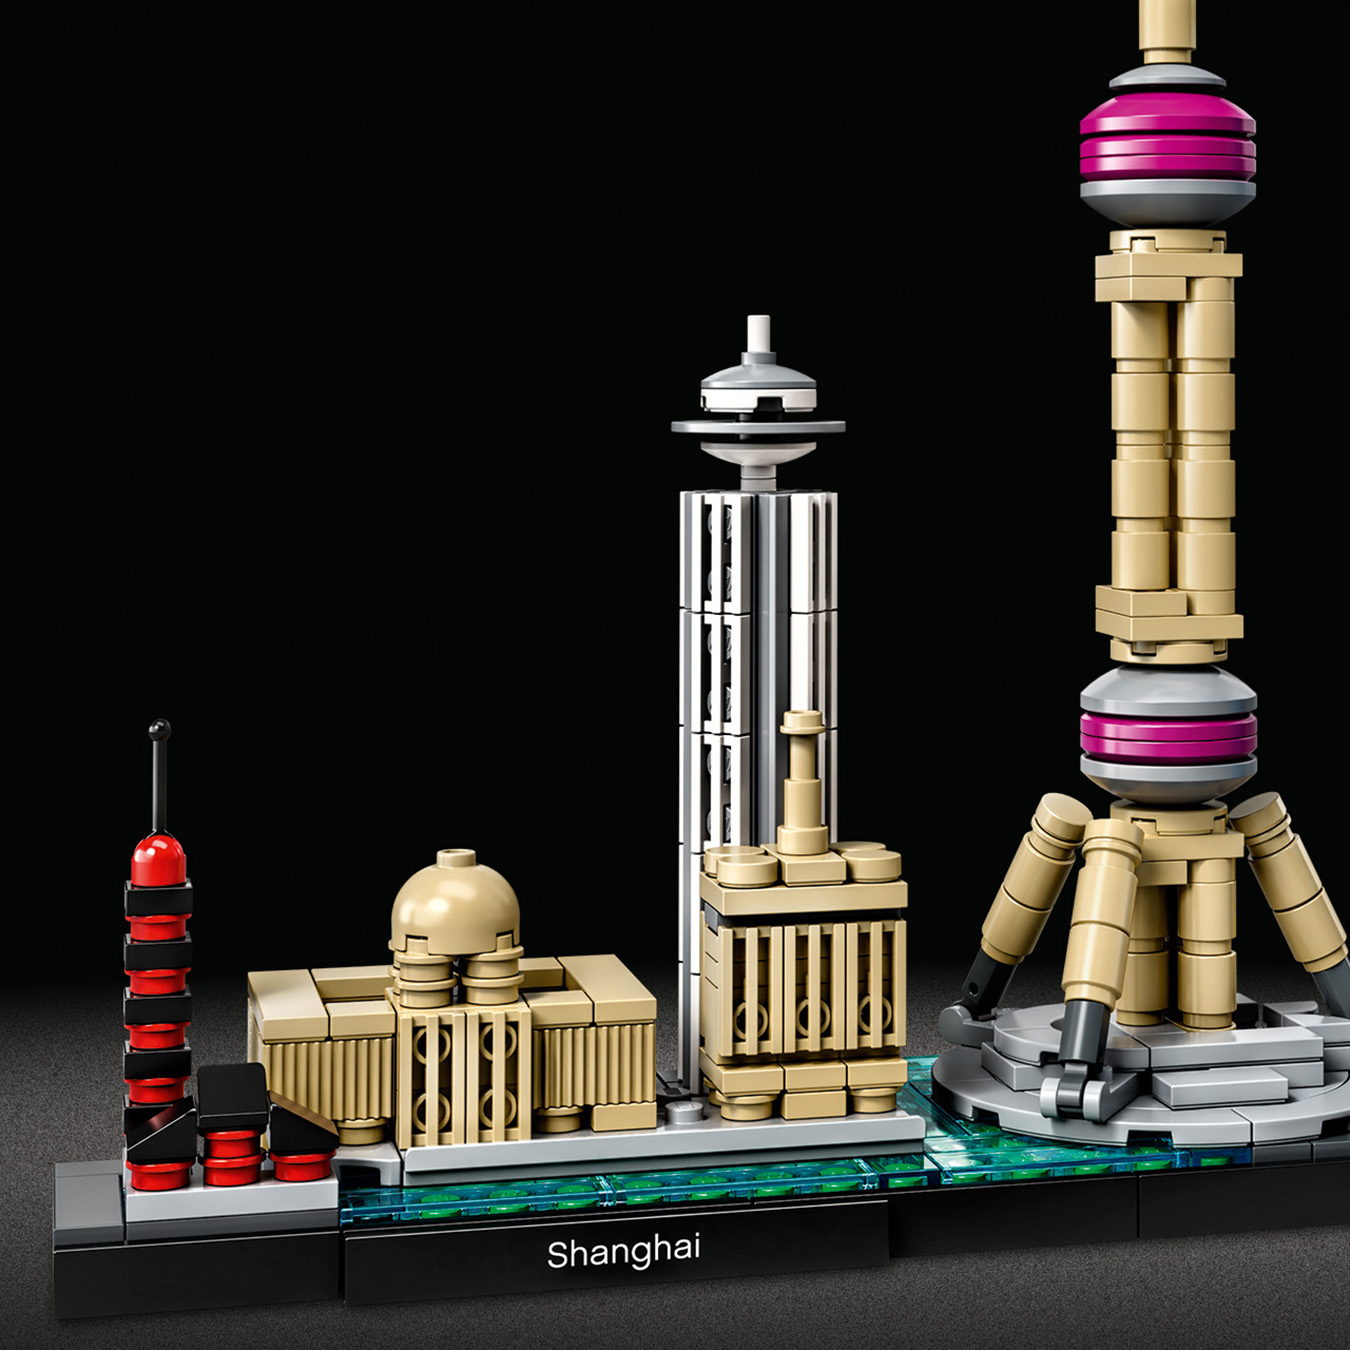 LEGO Architecture Shanghai - 21039